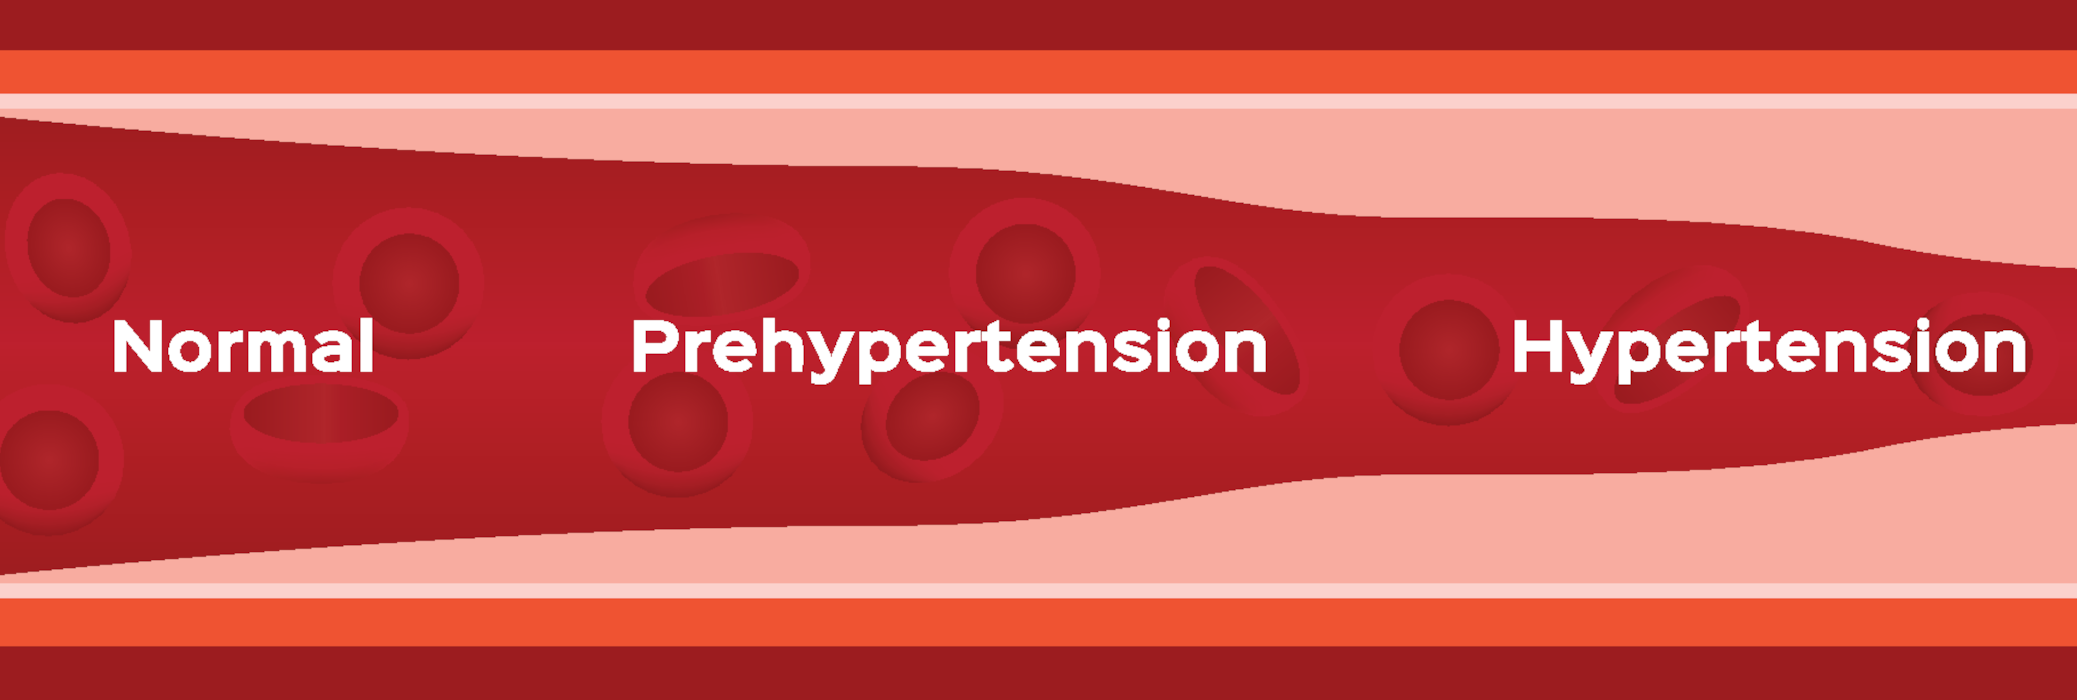 Hypertension factors - high blood pressure